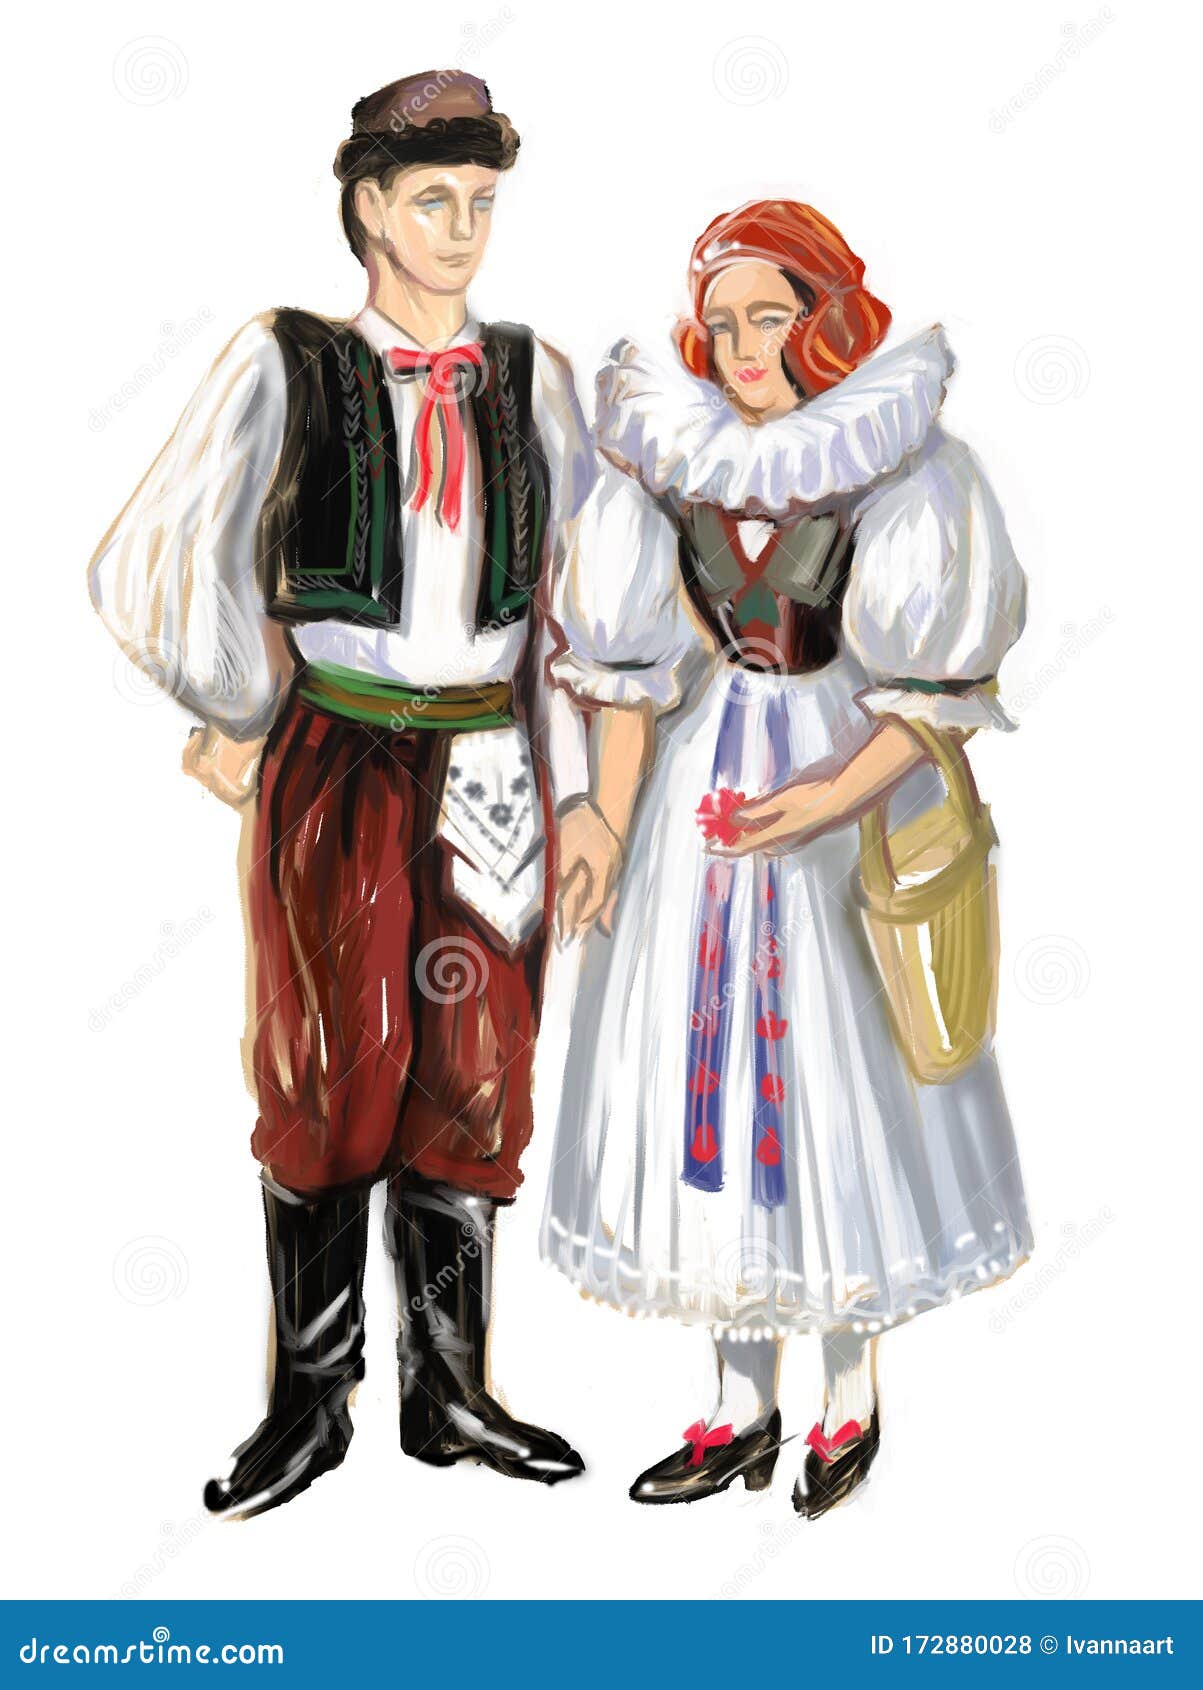 National Folk Czech Republic Moravia Region Hana Costume Girl and Boy ...